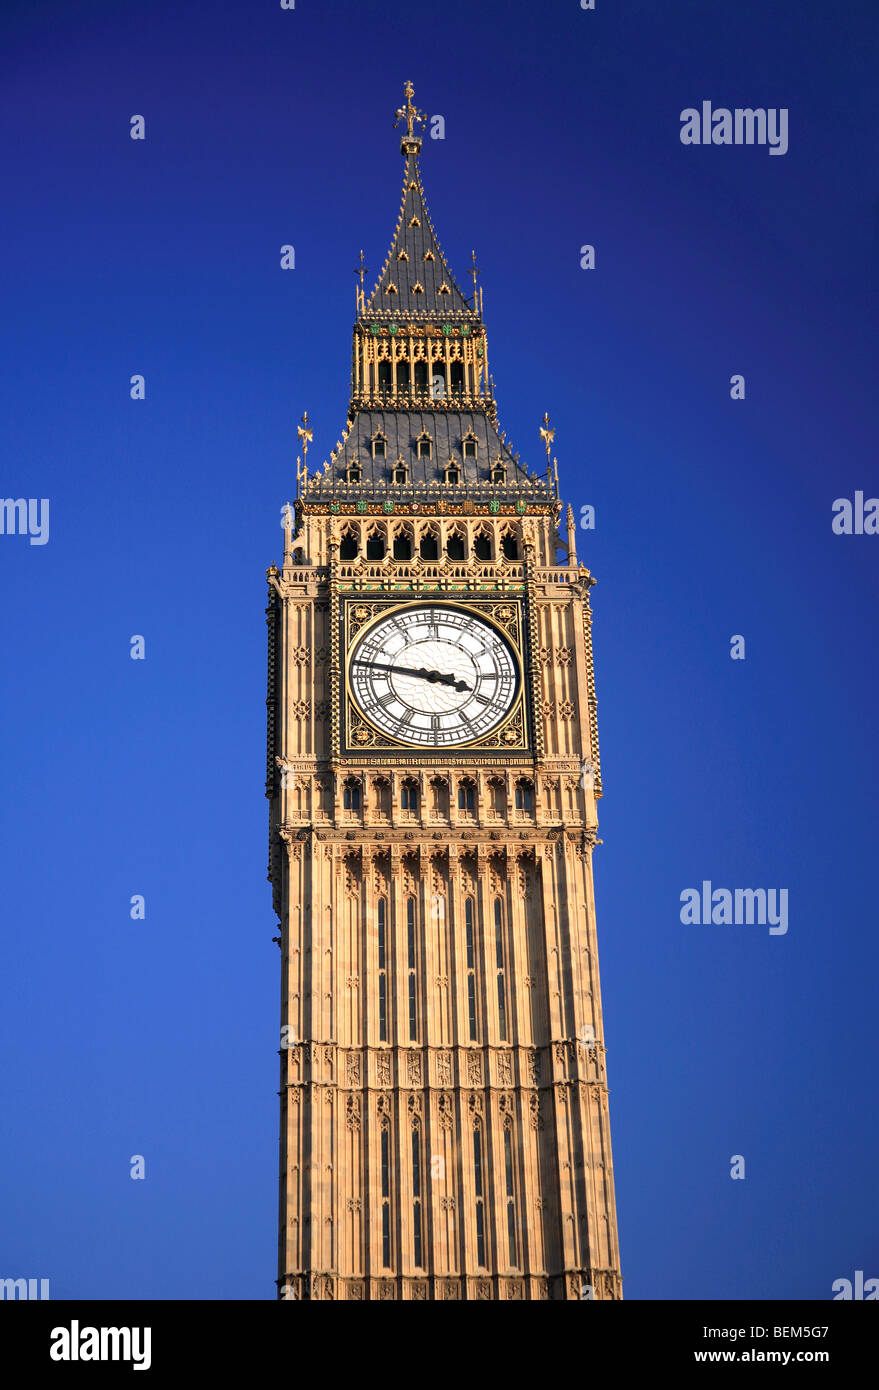 Ziffernblatt Big Ben St. Stephen's Tower Parlament Gebäude Westminster London City England UK Stockfoto